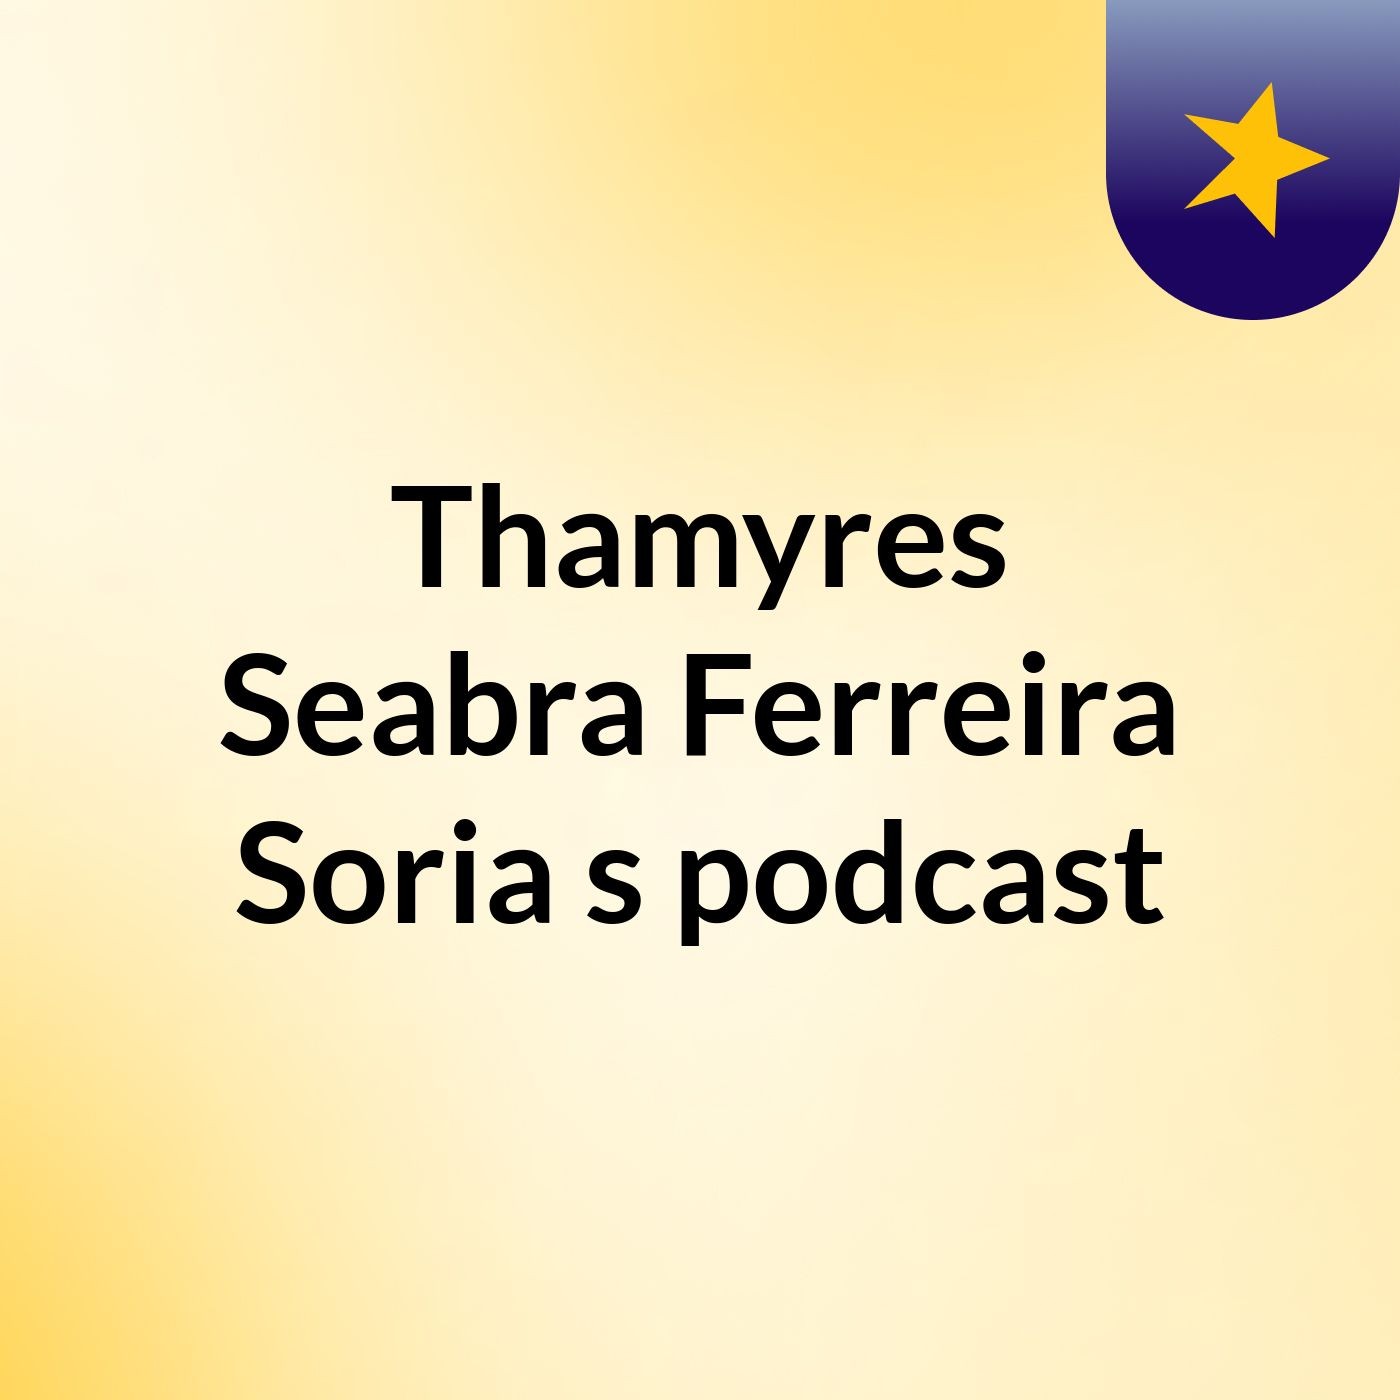 Thamyres Seabra Ferreira Soria's podcast